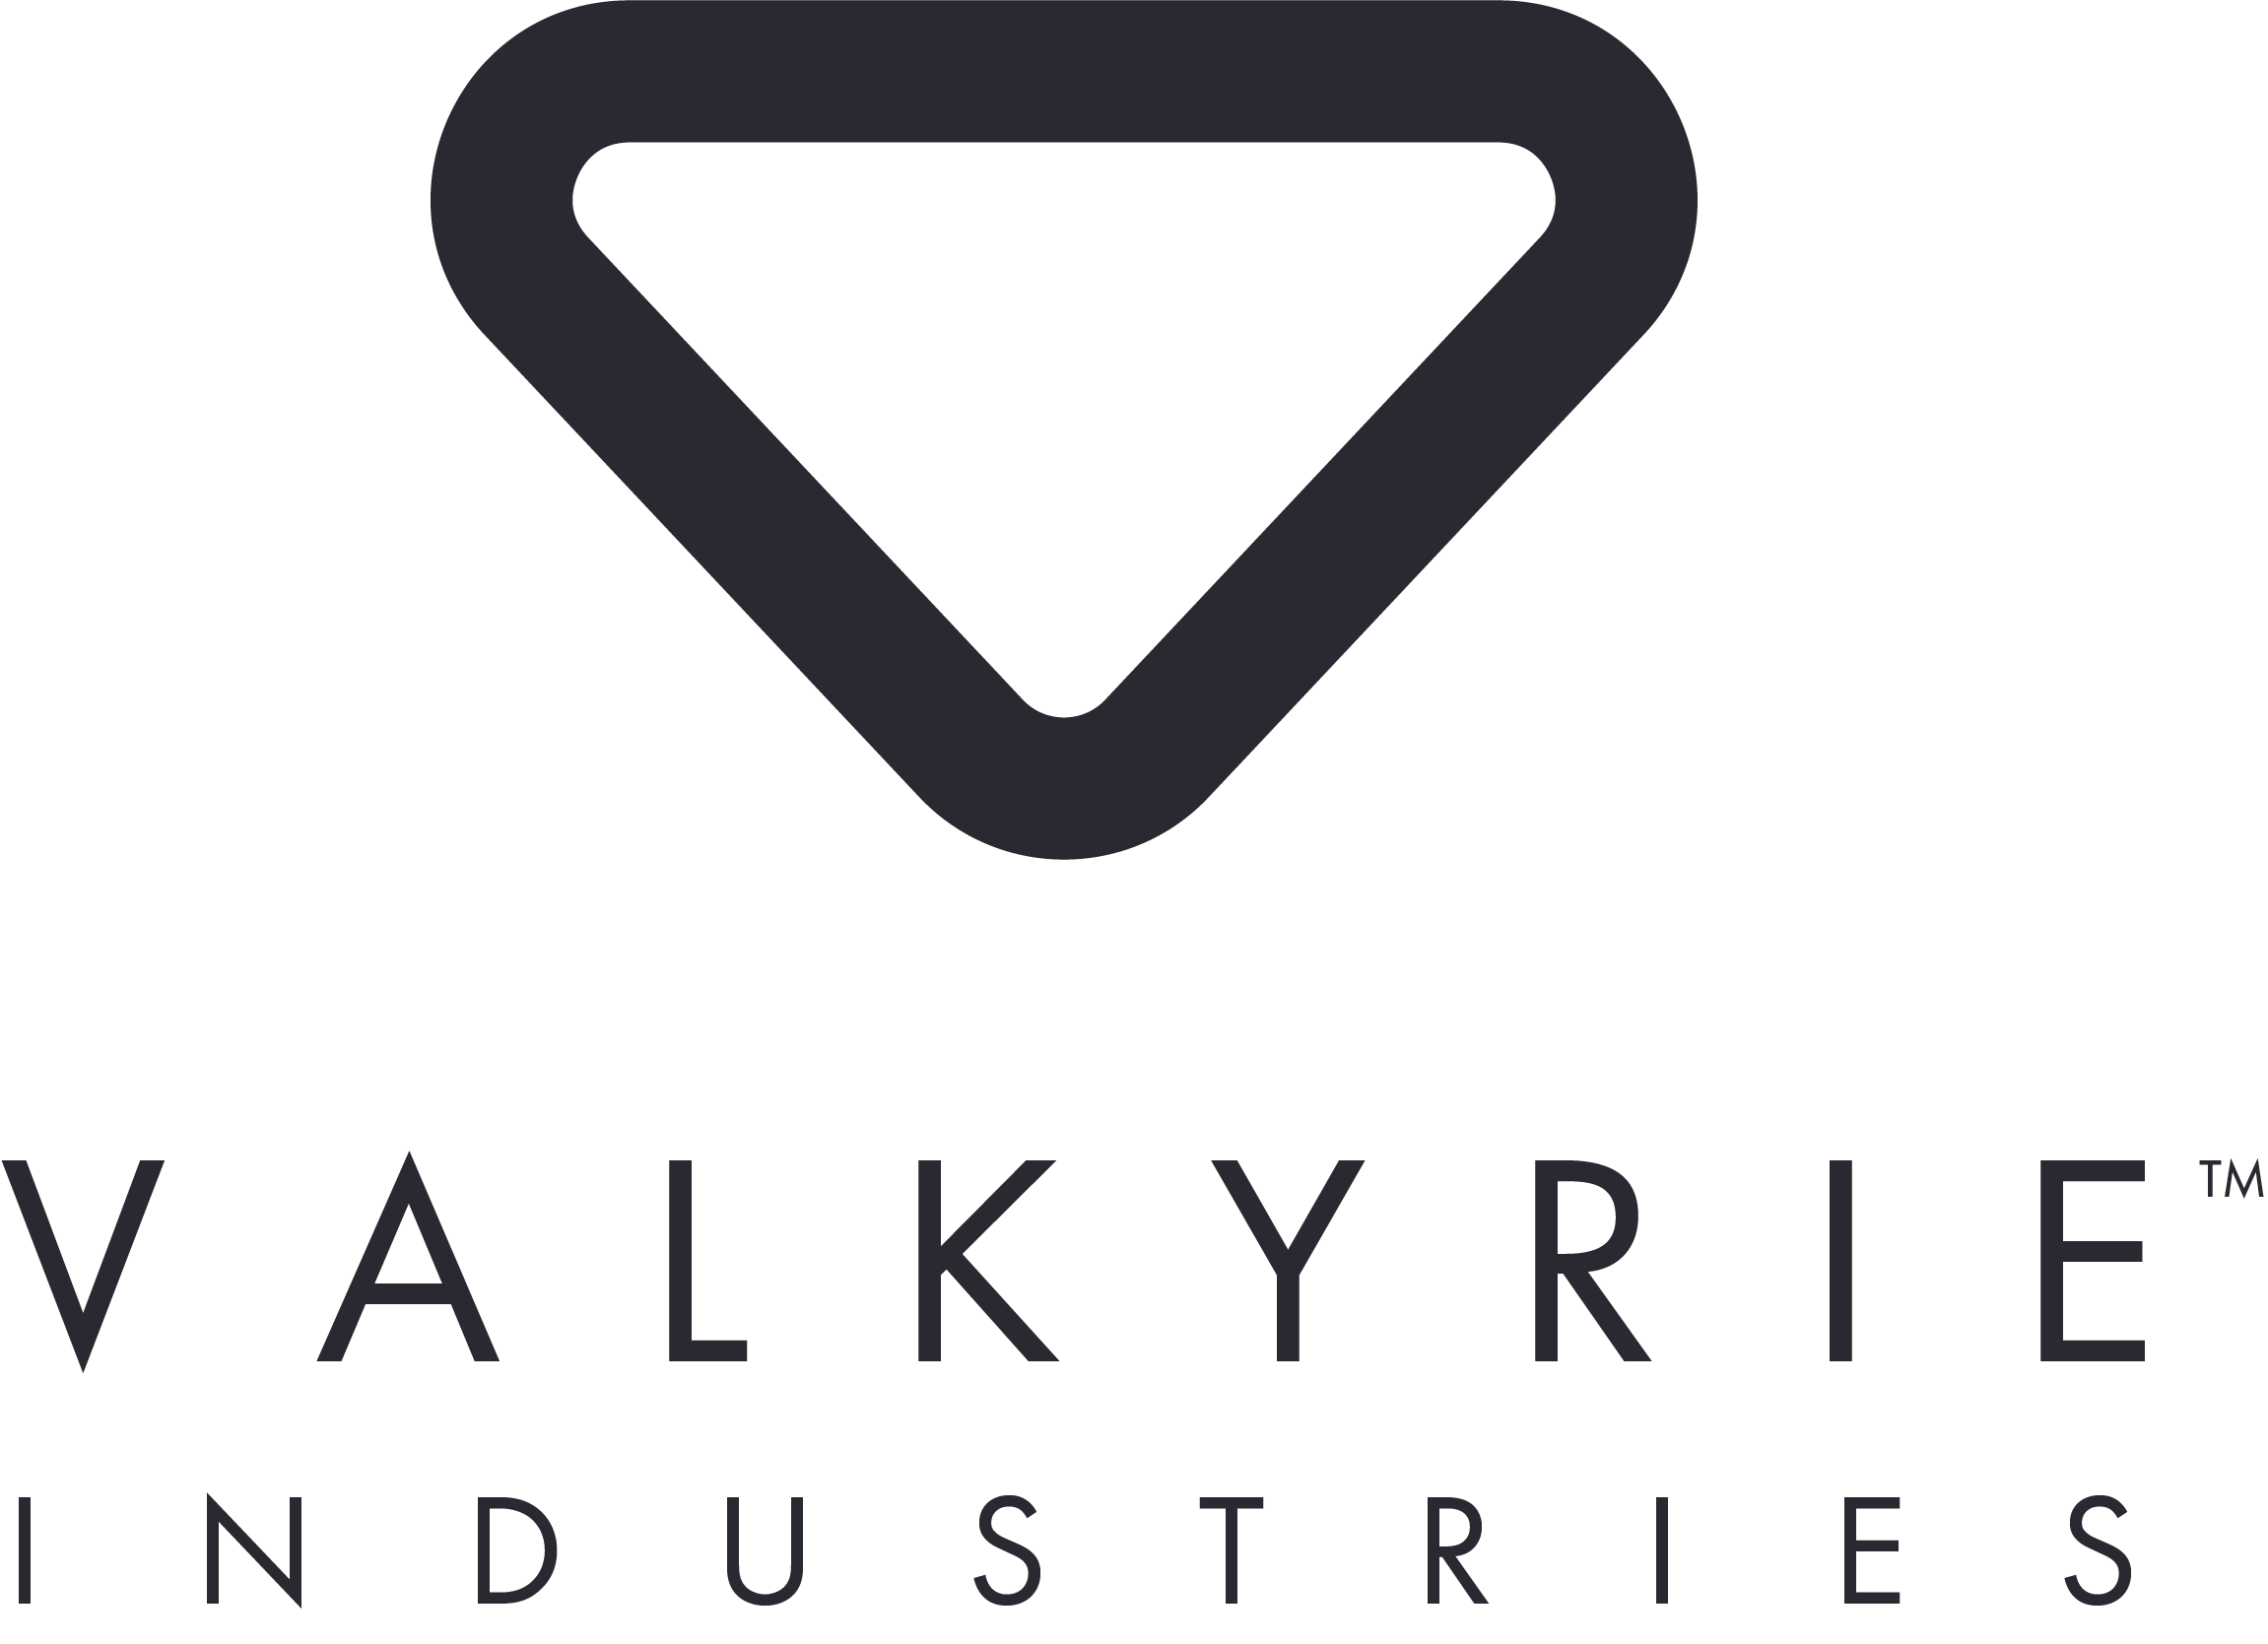 Valkyrie Industries Ltd